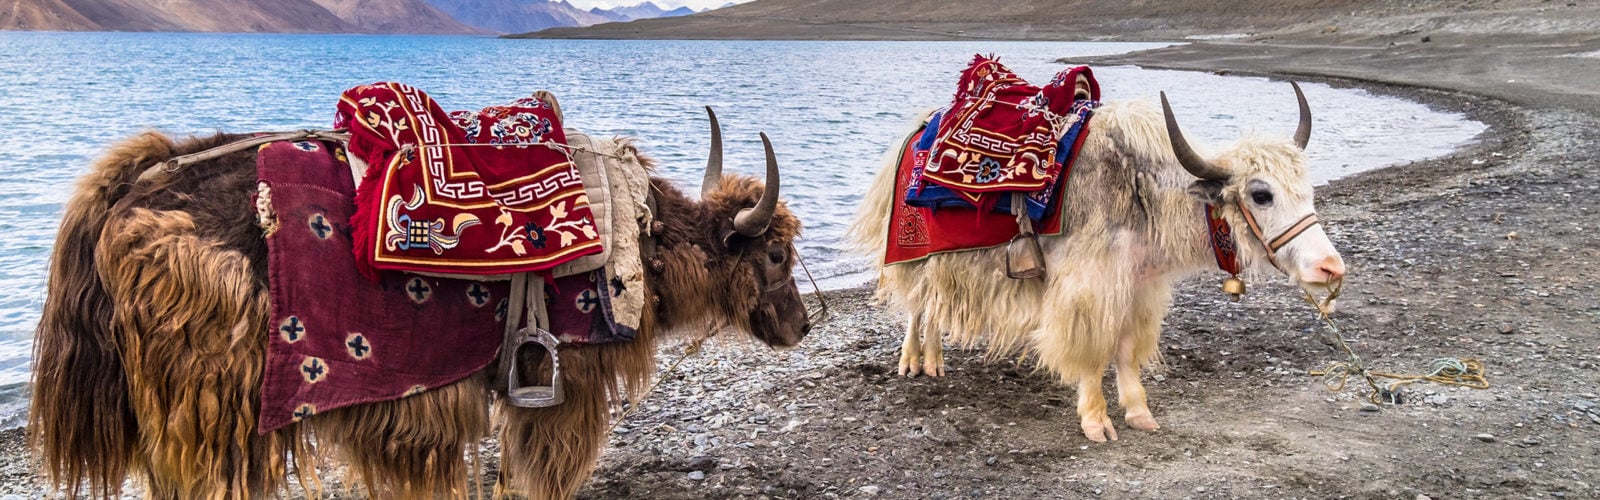 ladakh-yaks-and-lake